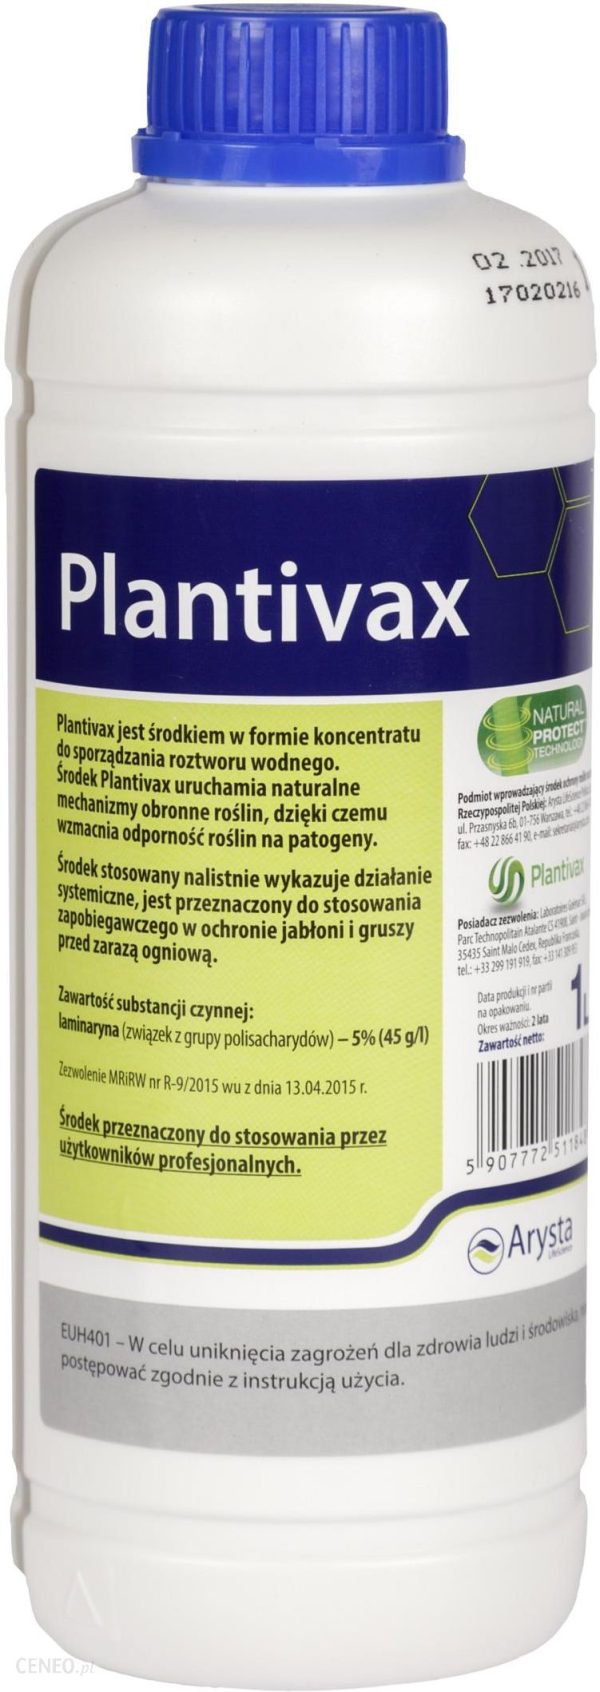 ARYSTA PLANTIVAX 5L